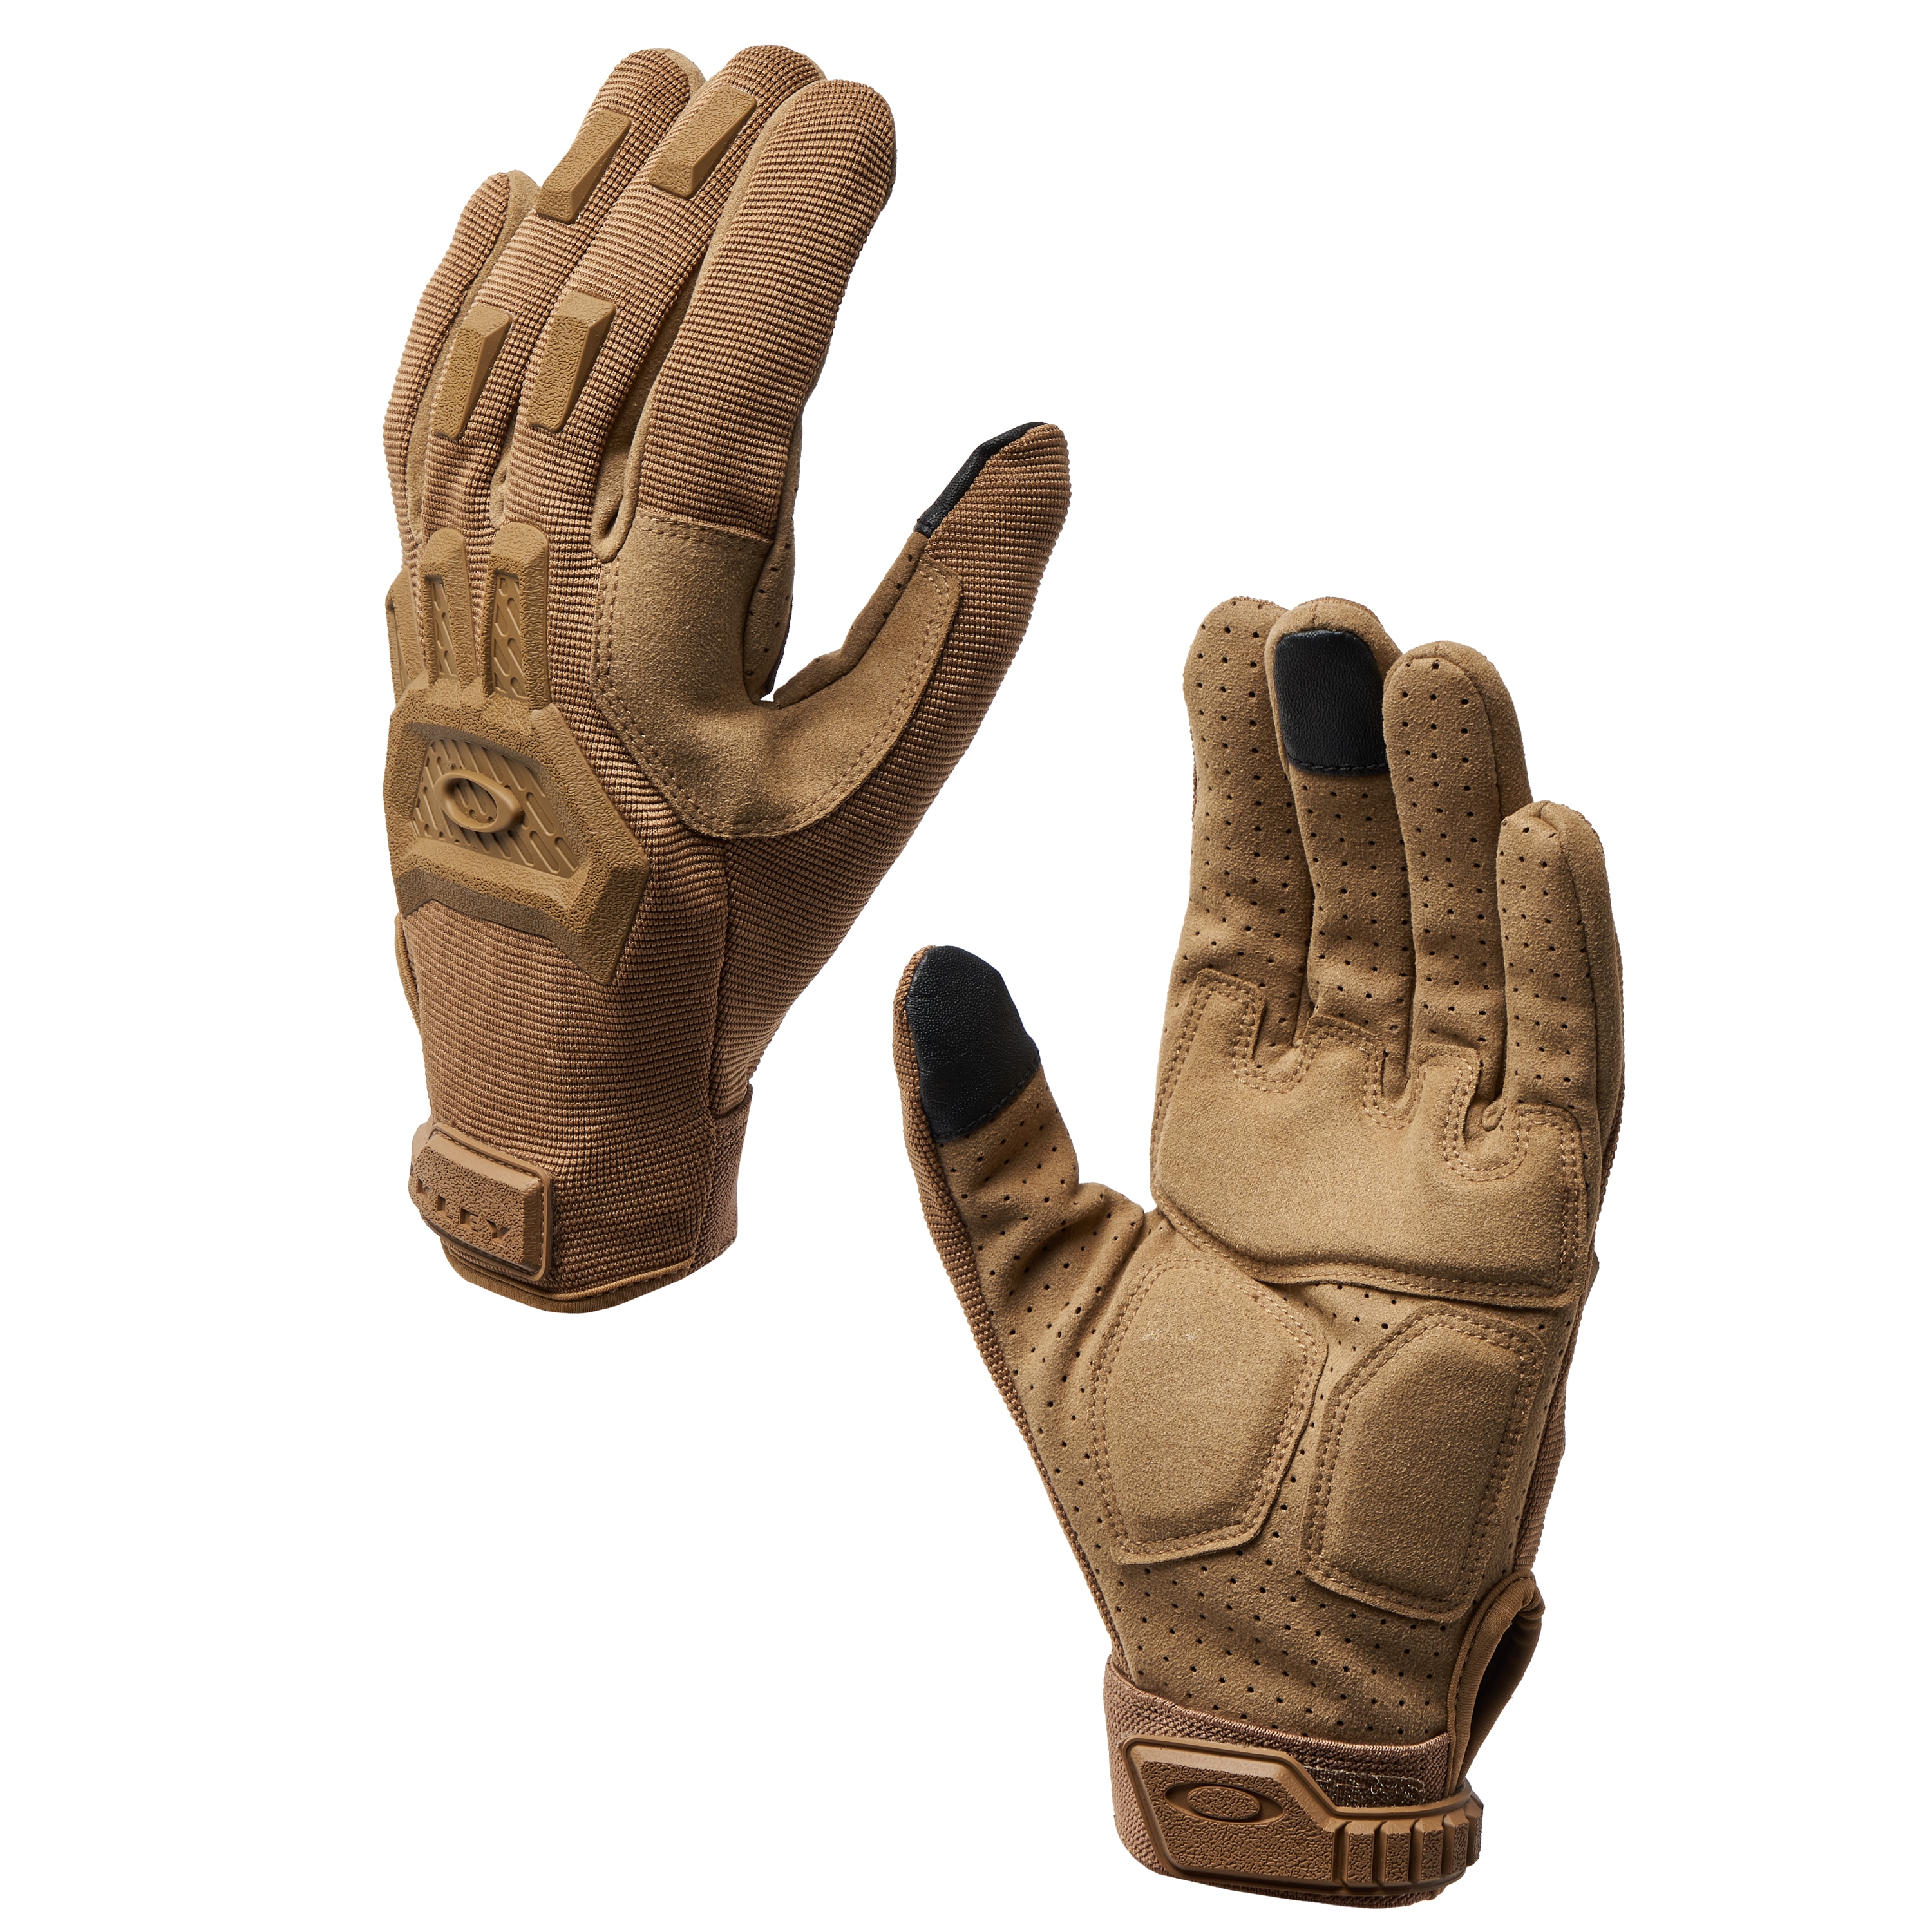 oakley glove